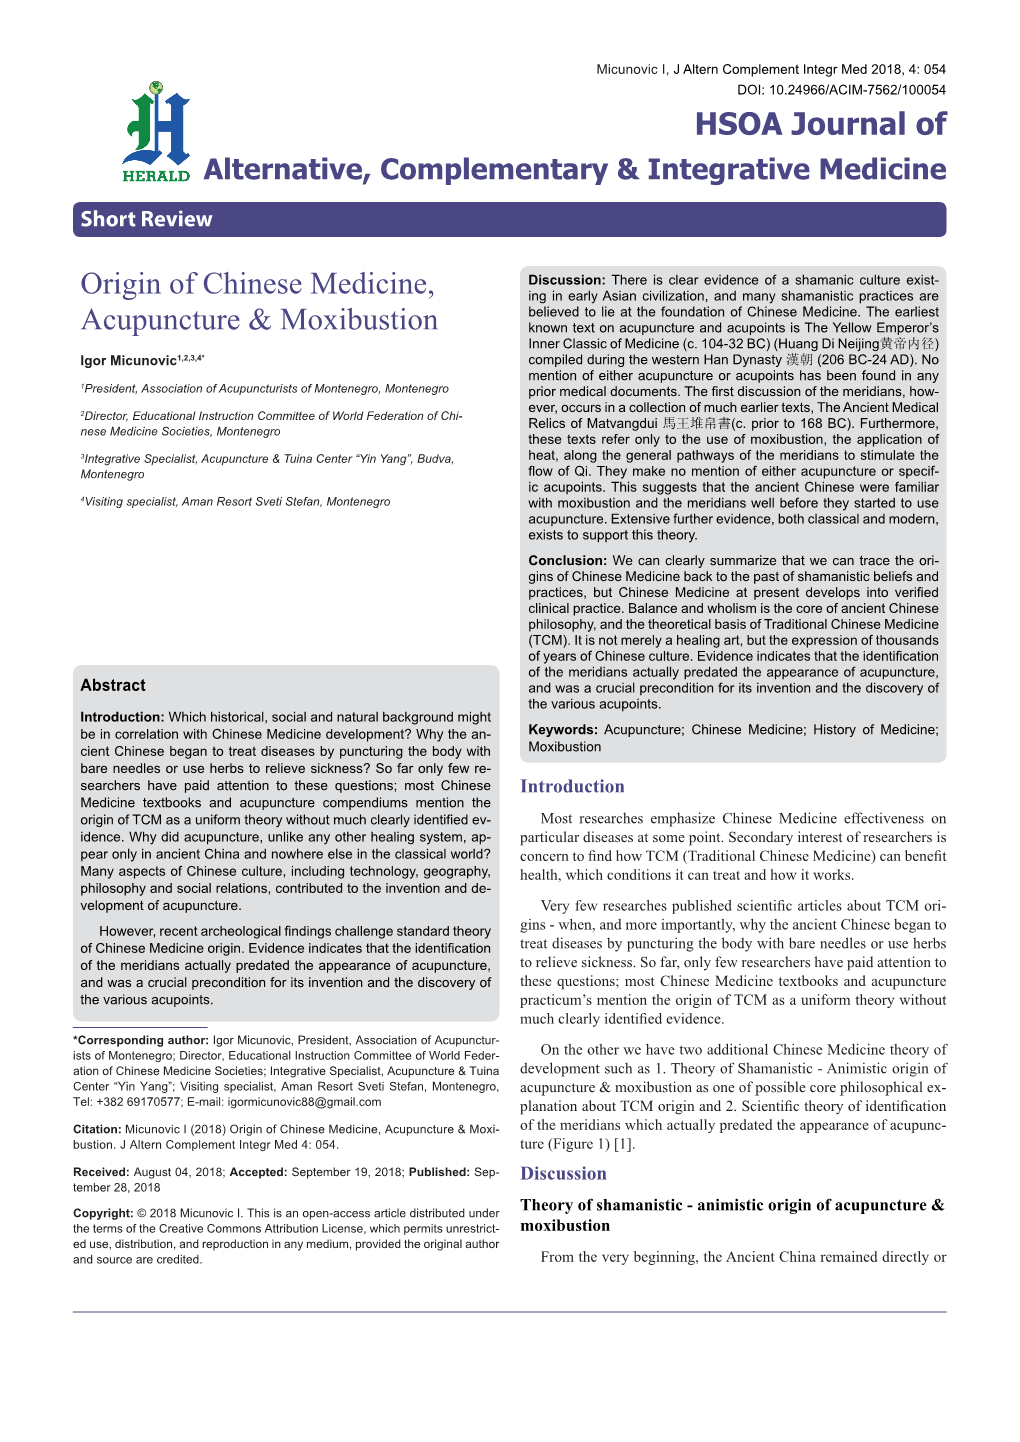 Origin of Chinese Medicine, Acupuncture & Moxibustion